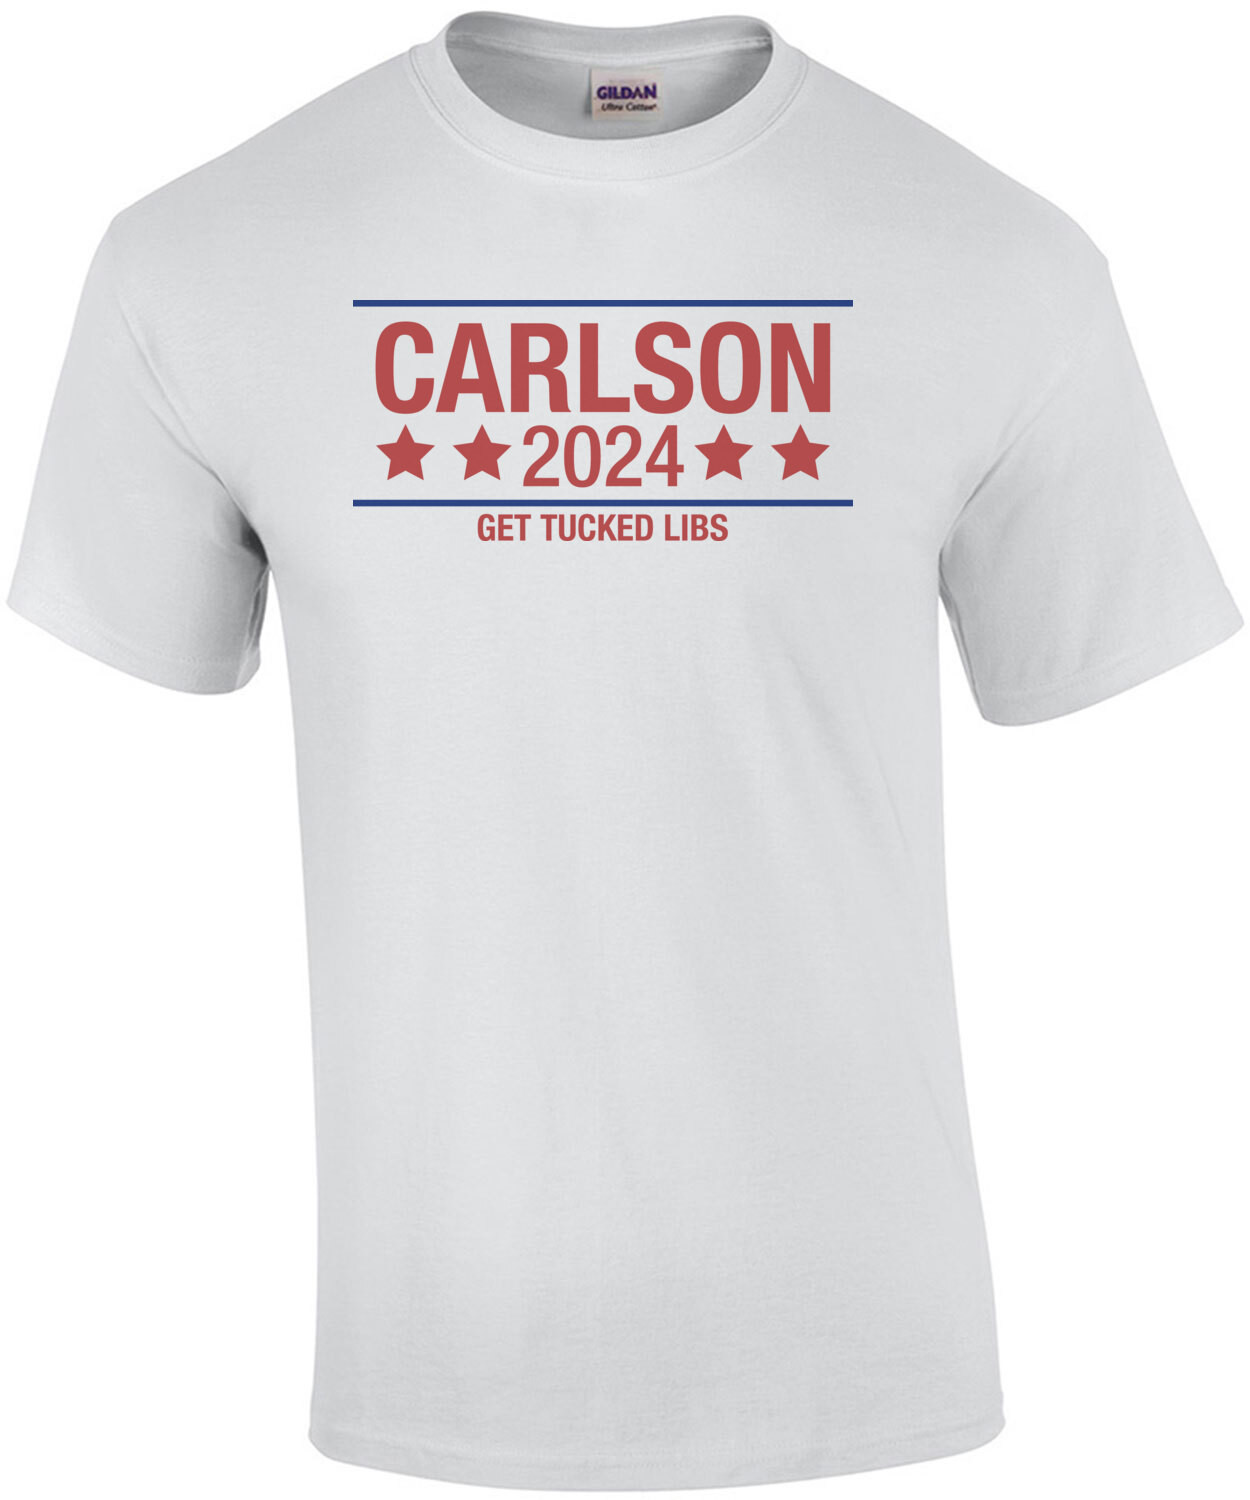 Carlson 2024 Get Tucked Libs Shirt